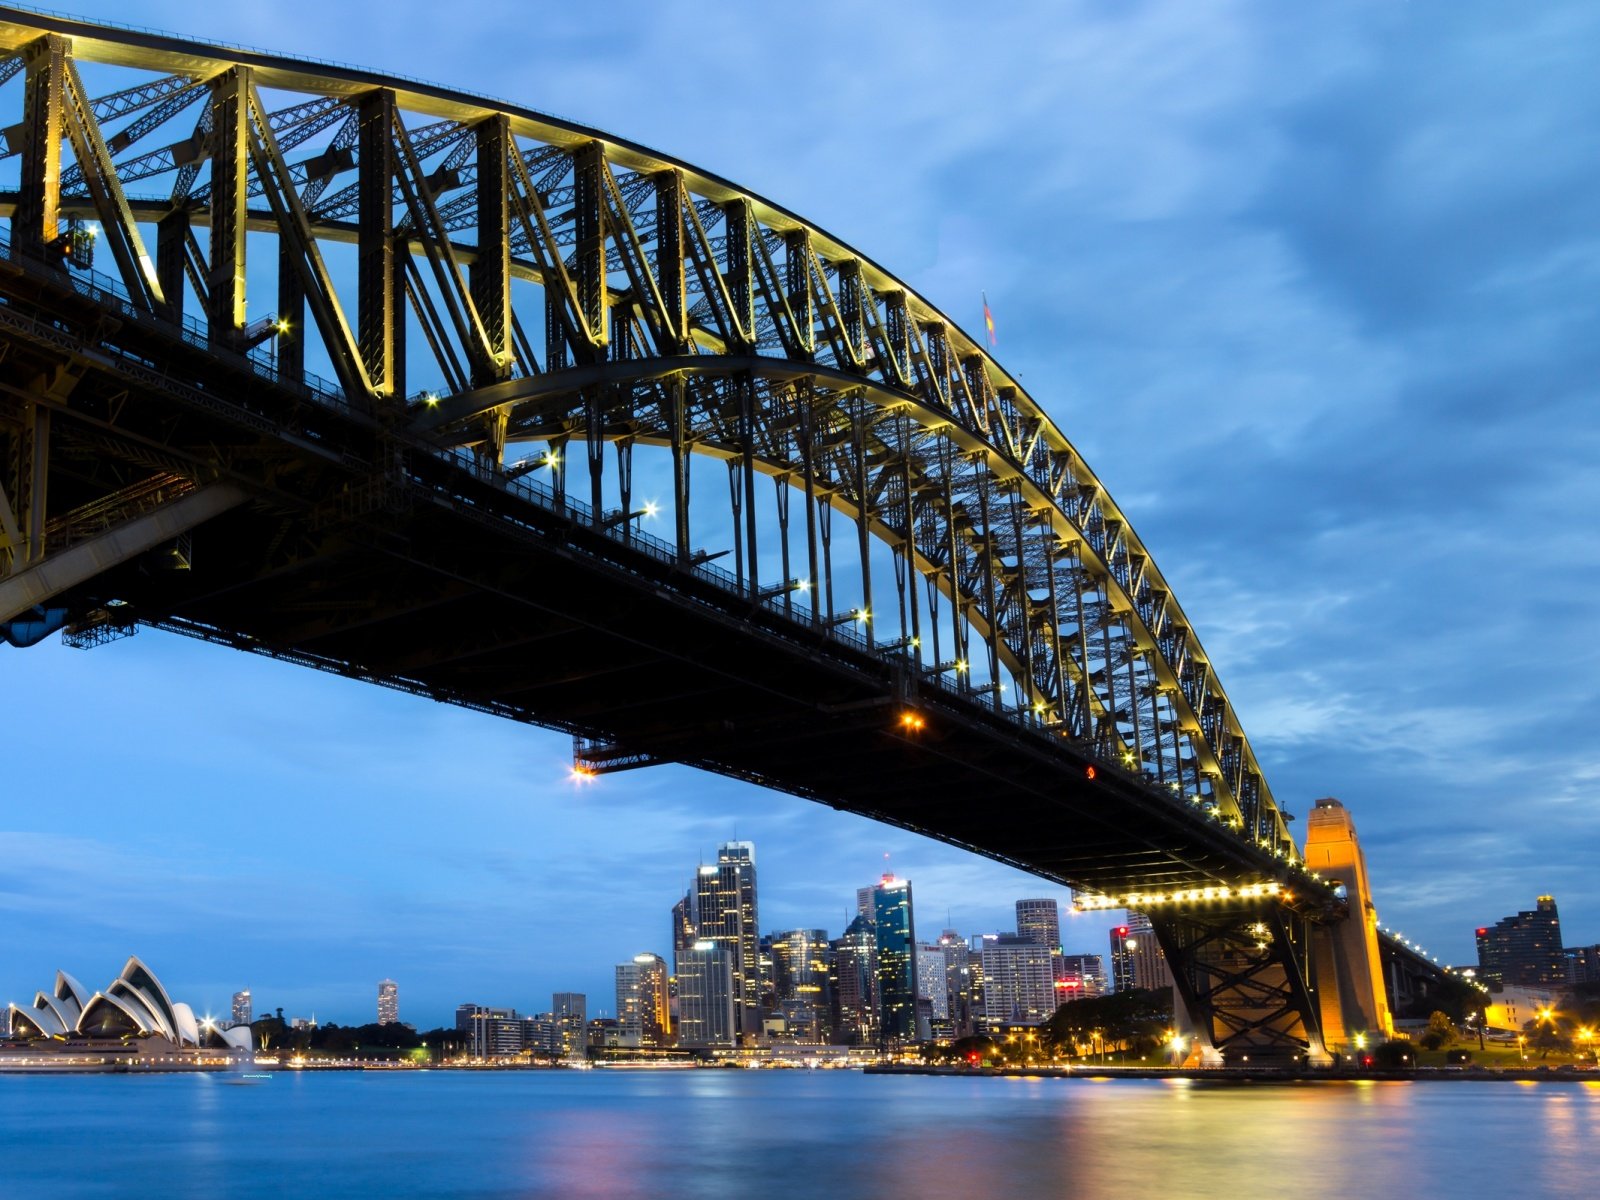 Harbour bridge. Мост Харбор бридж в Австралии. Мост Харбор-бридж в Сиднее. Харбор-бридж достопримечательности Австралии. Харбор-бридж (Сидней, Австралия).